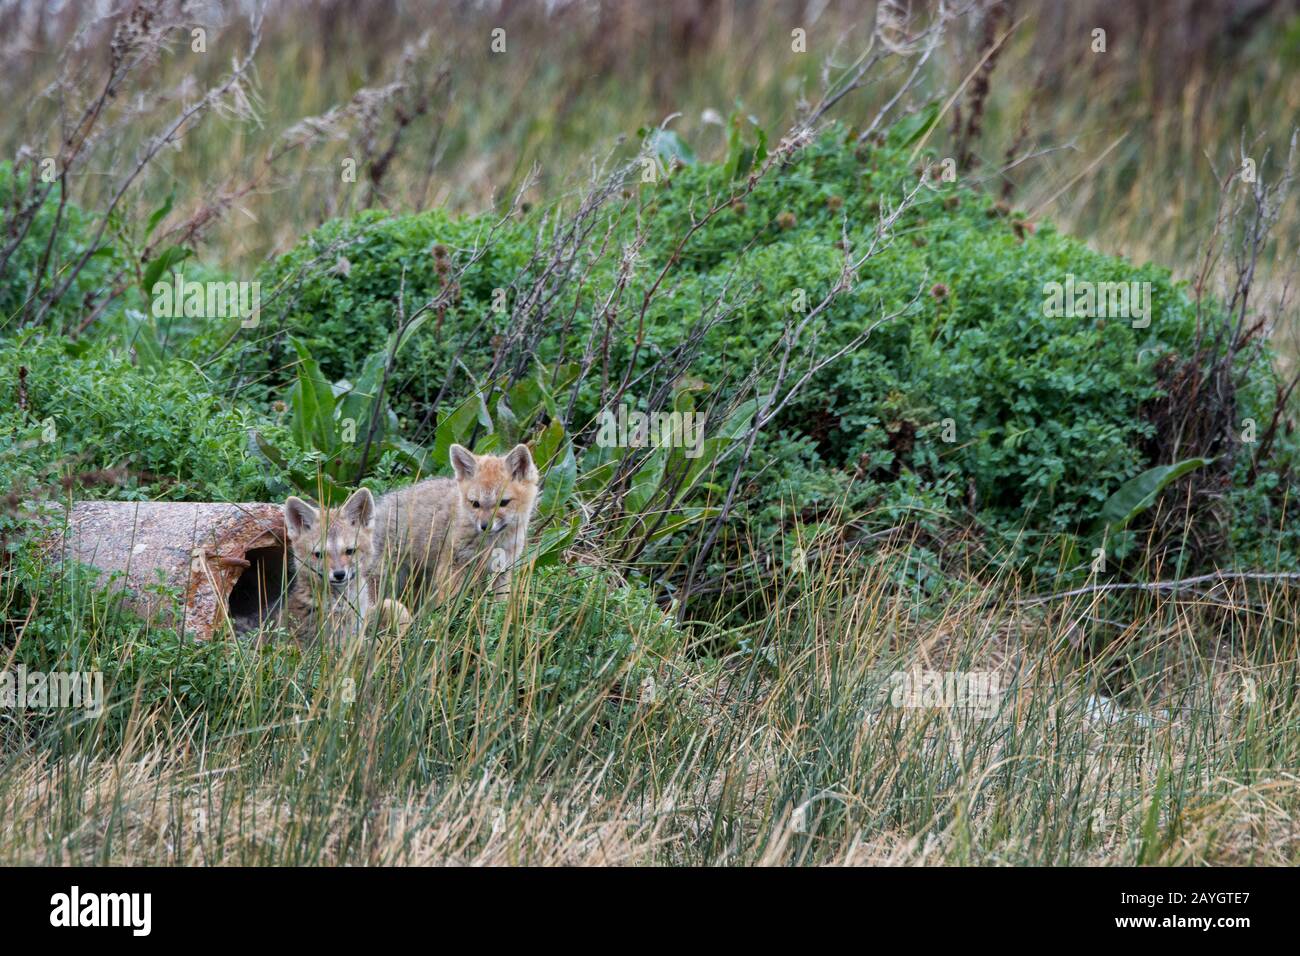 South American gray fox kits (Lycalopex griseus) in Laguna Nimez Nature Reserve in El Calafate, Argentina. Stock Photo